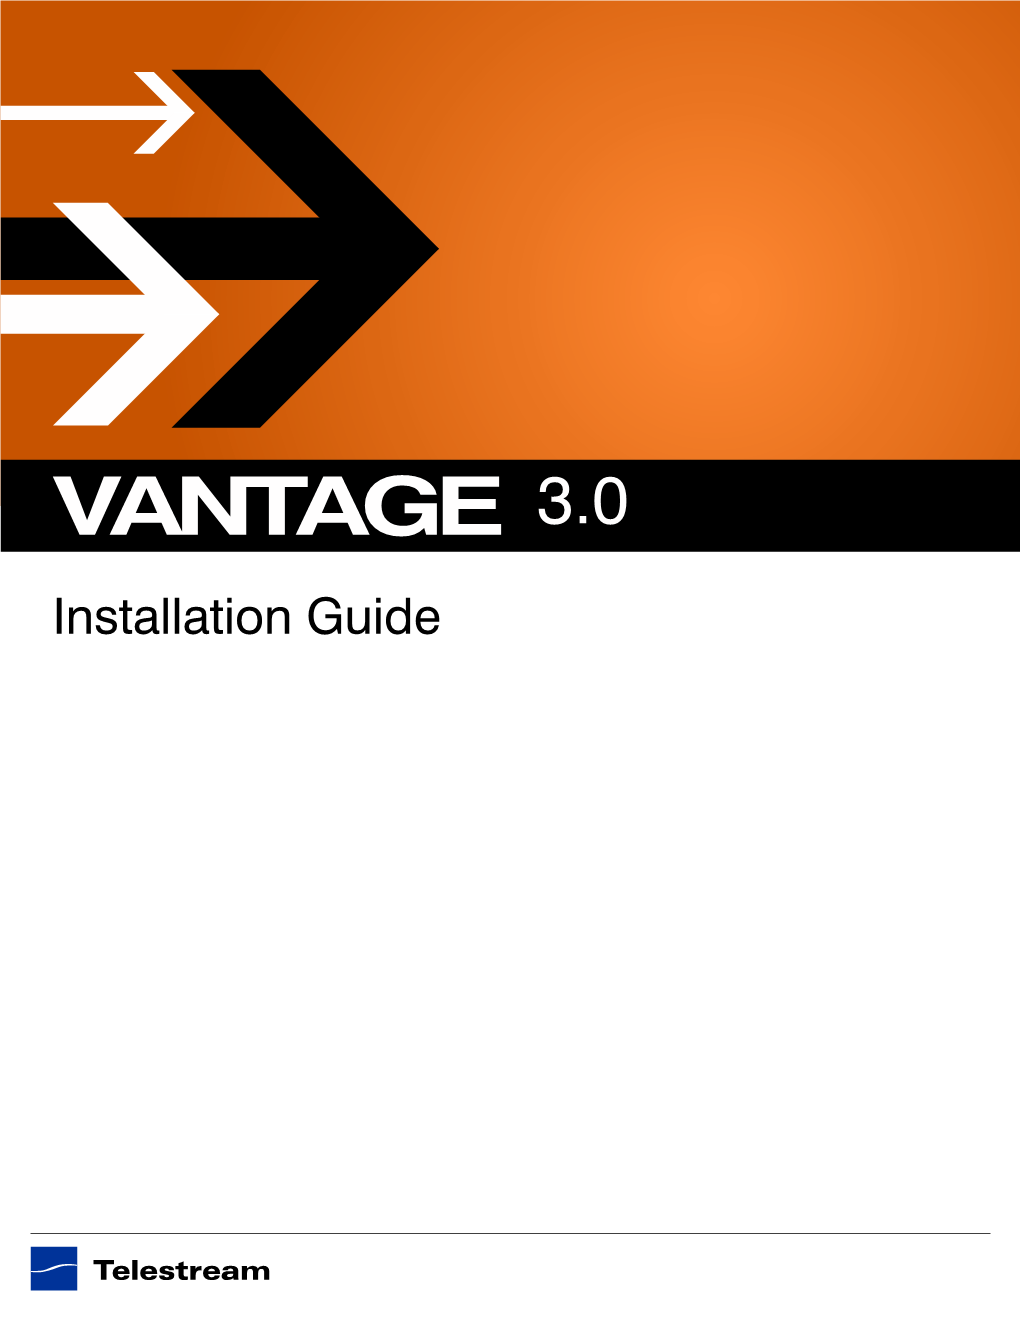 Vantage Version 3.0 Installation Guide